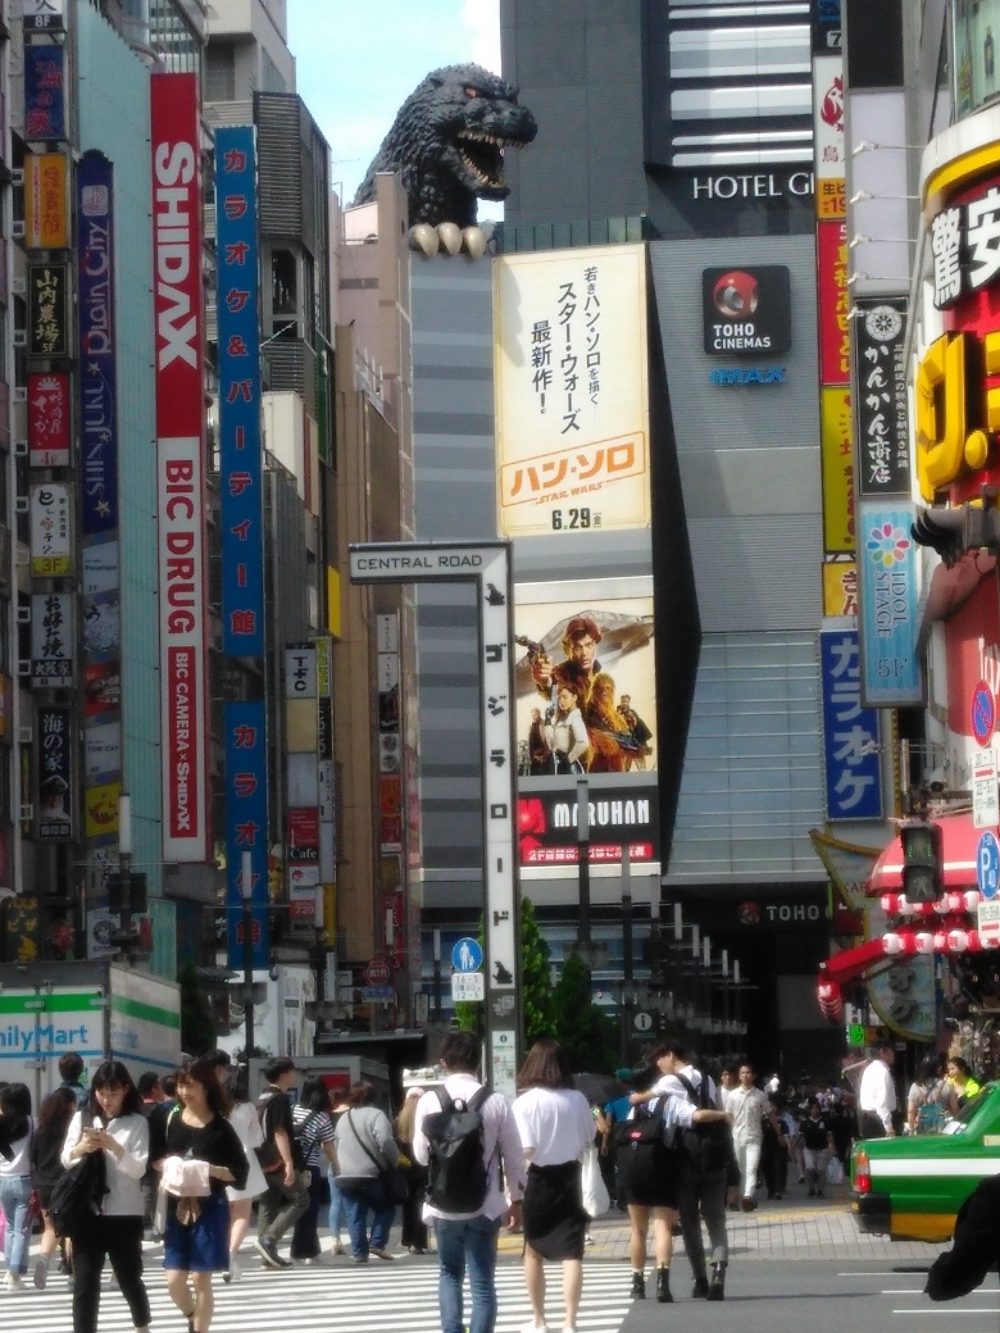 Photo of Godzilla over Toho theater and the busy crowd of Shinjuku.